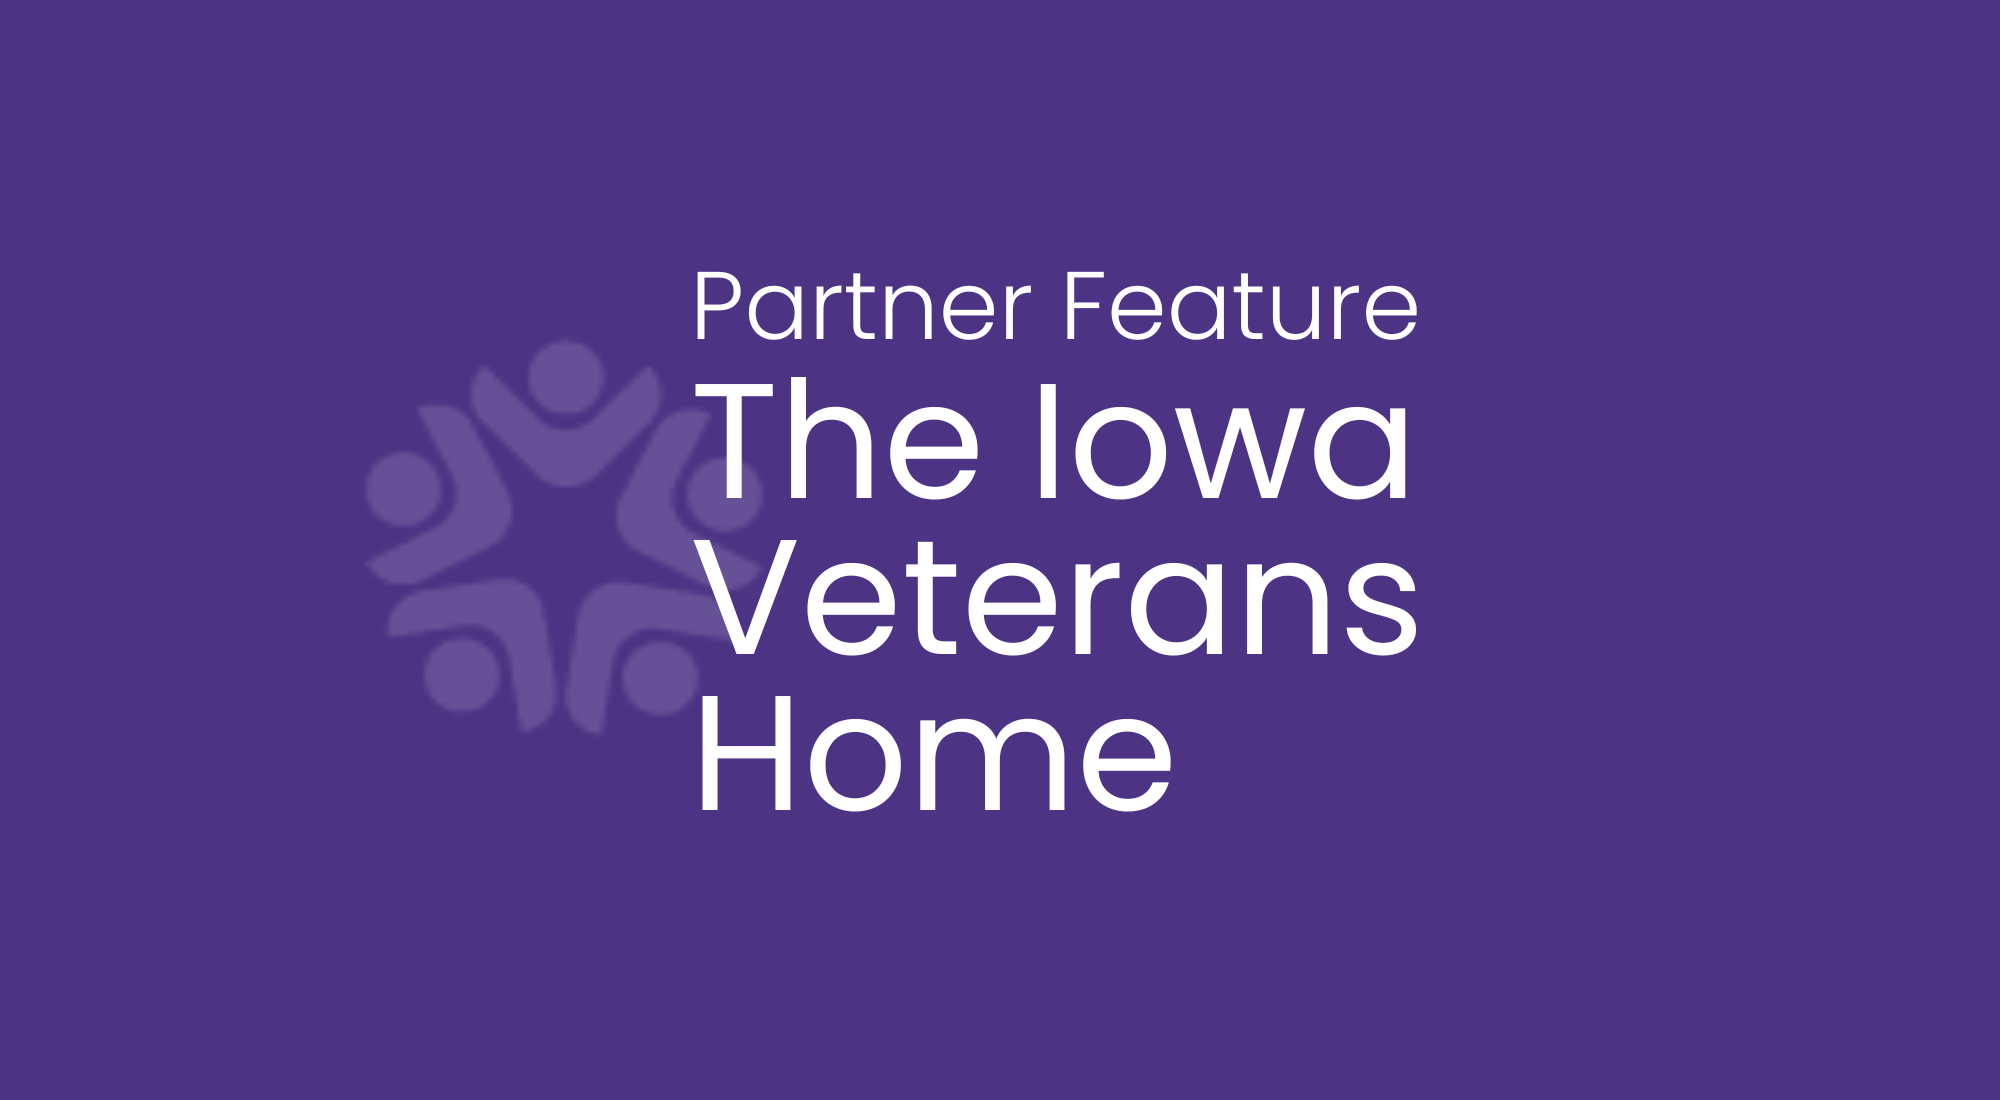 Partner Feature: The Iowa Veterans Home